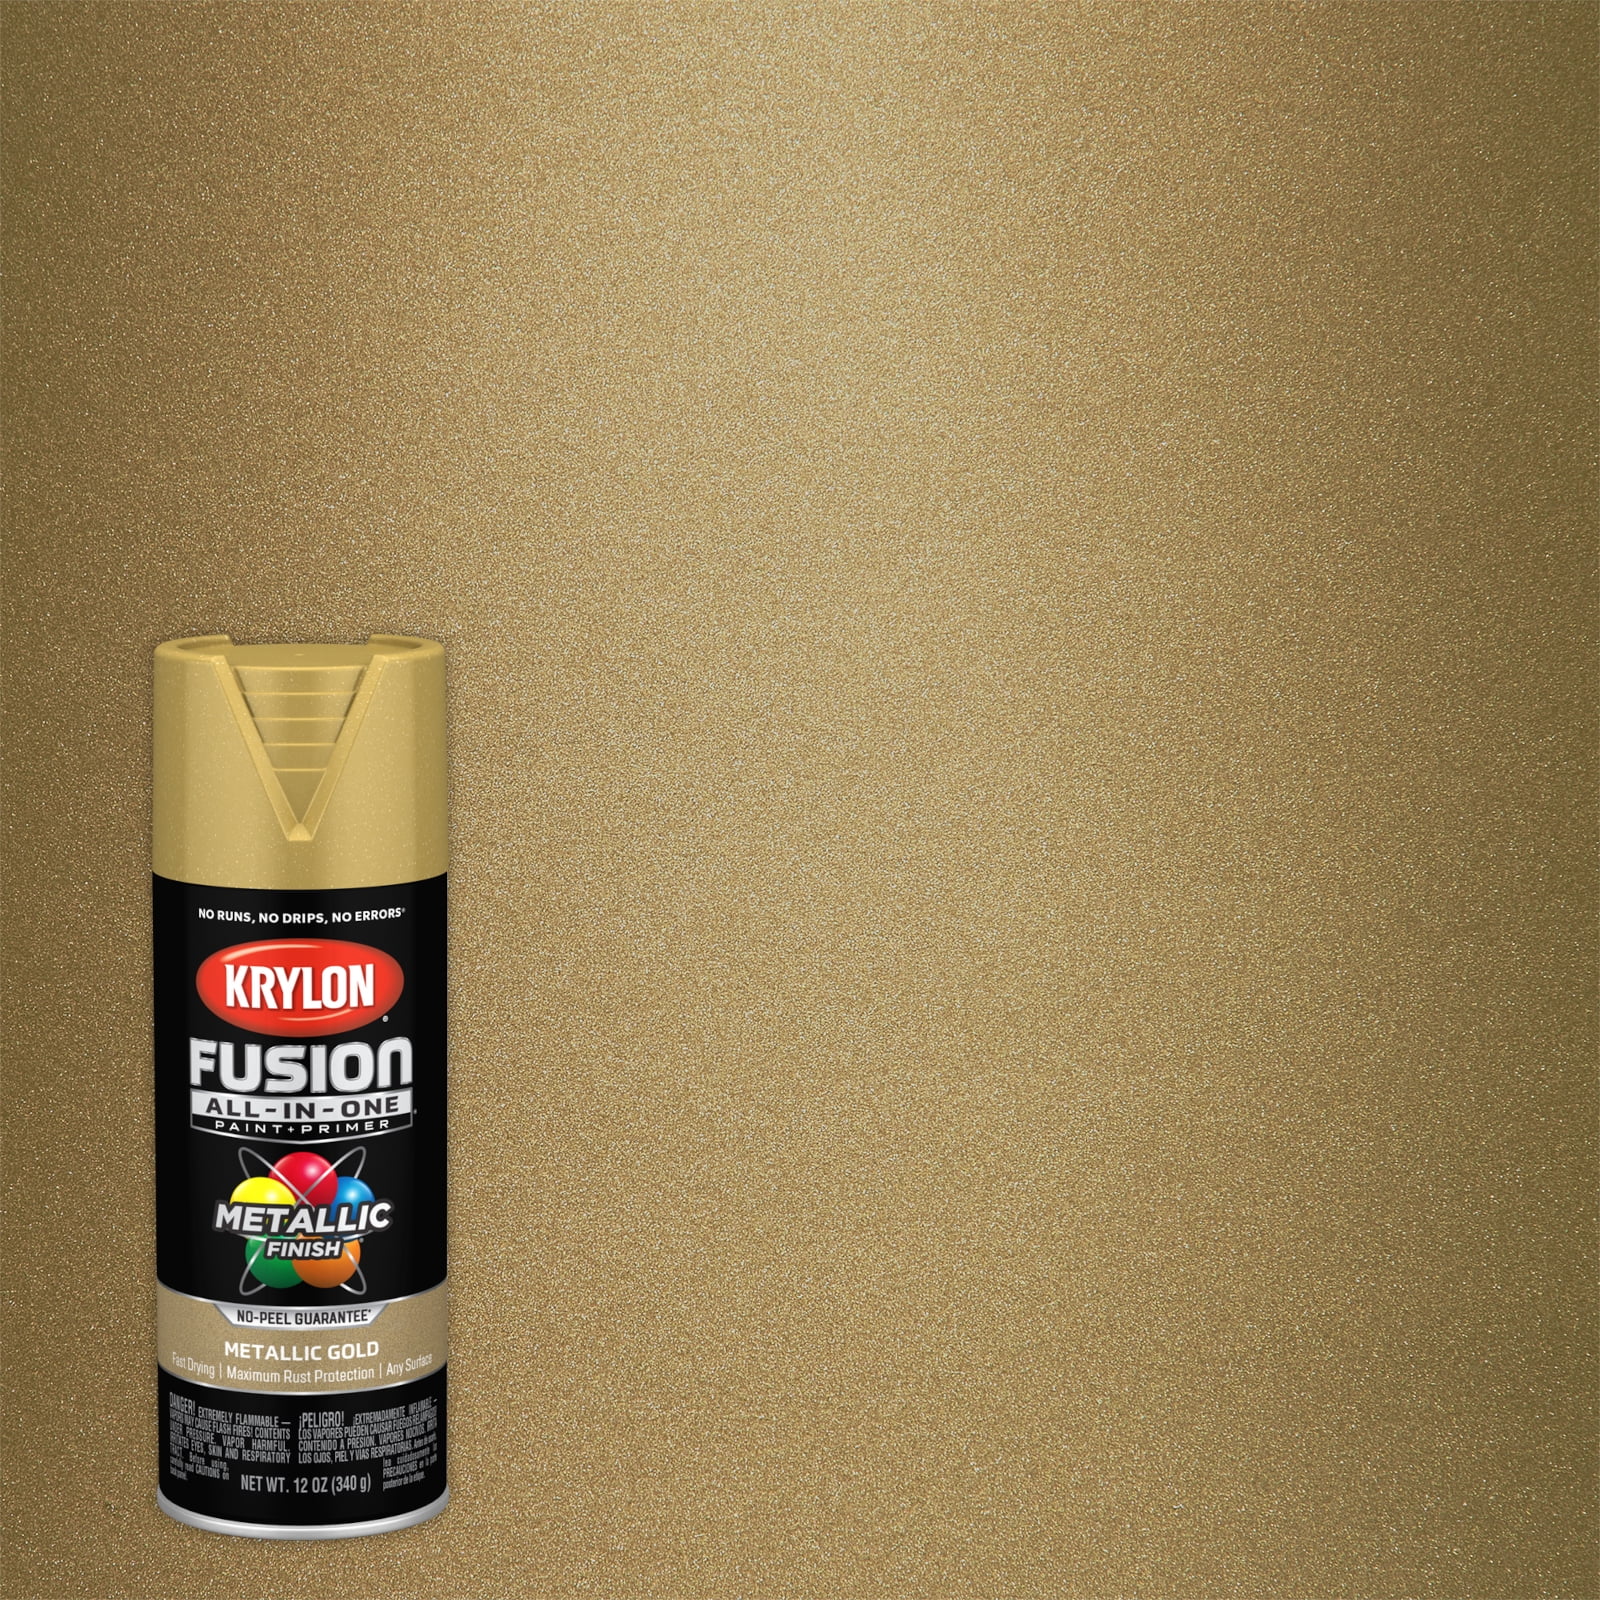 Krylon 8 oz. Foil Metallic Gold Spray Paint